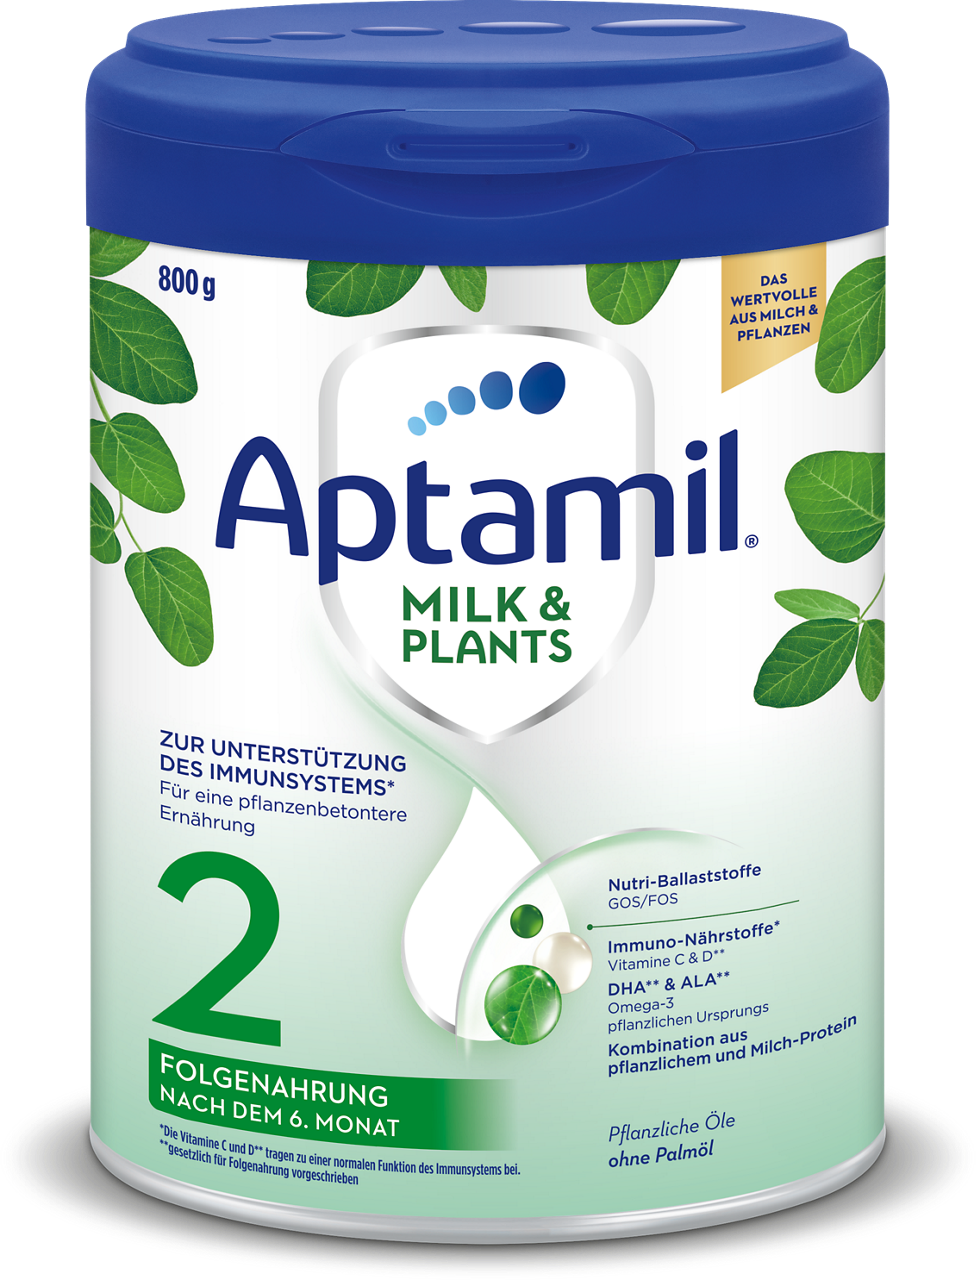 da-am-milk-and-plants-2-800g-4056631003633-0722-fop-s